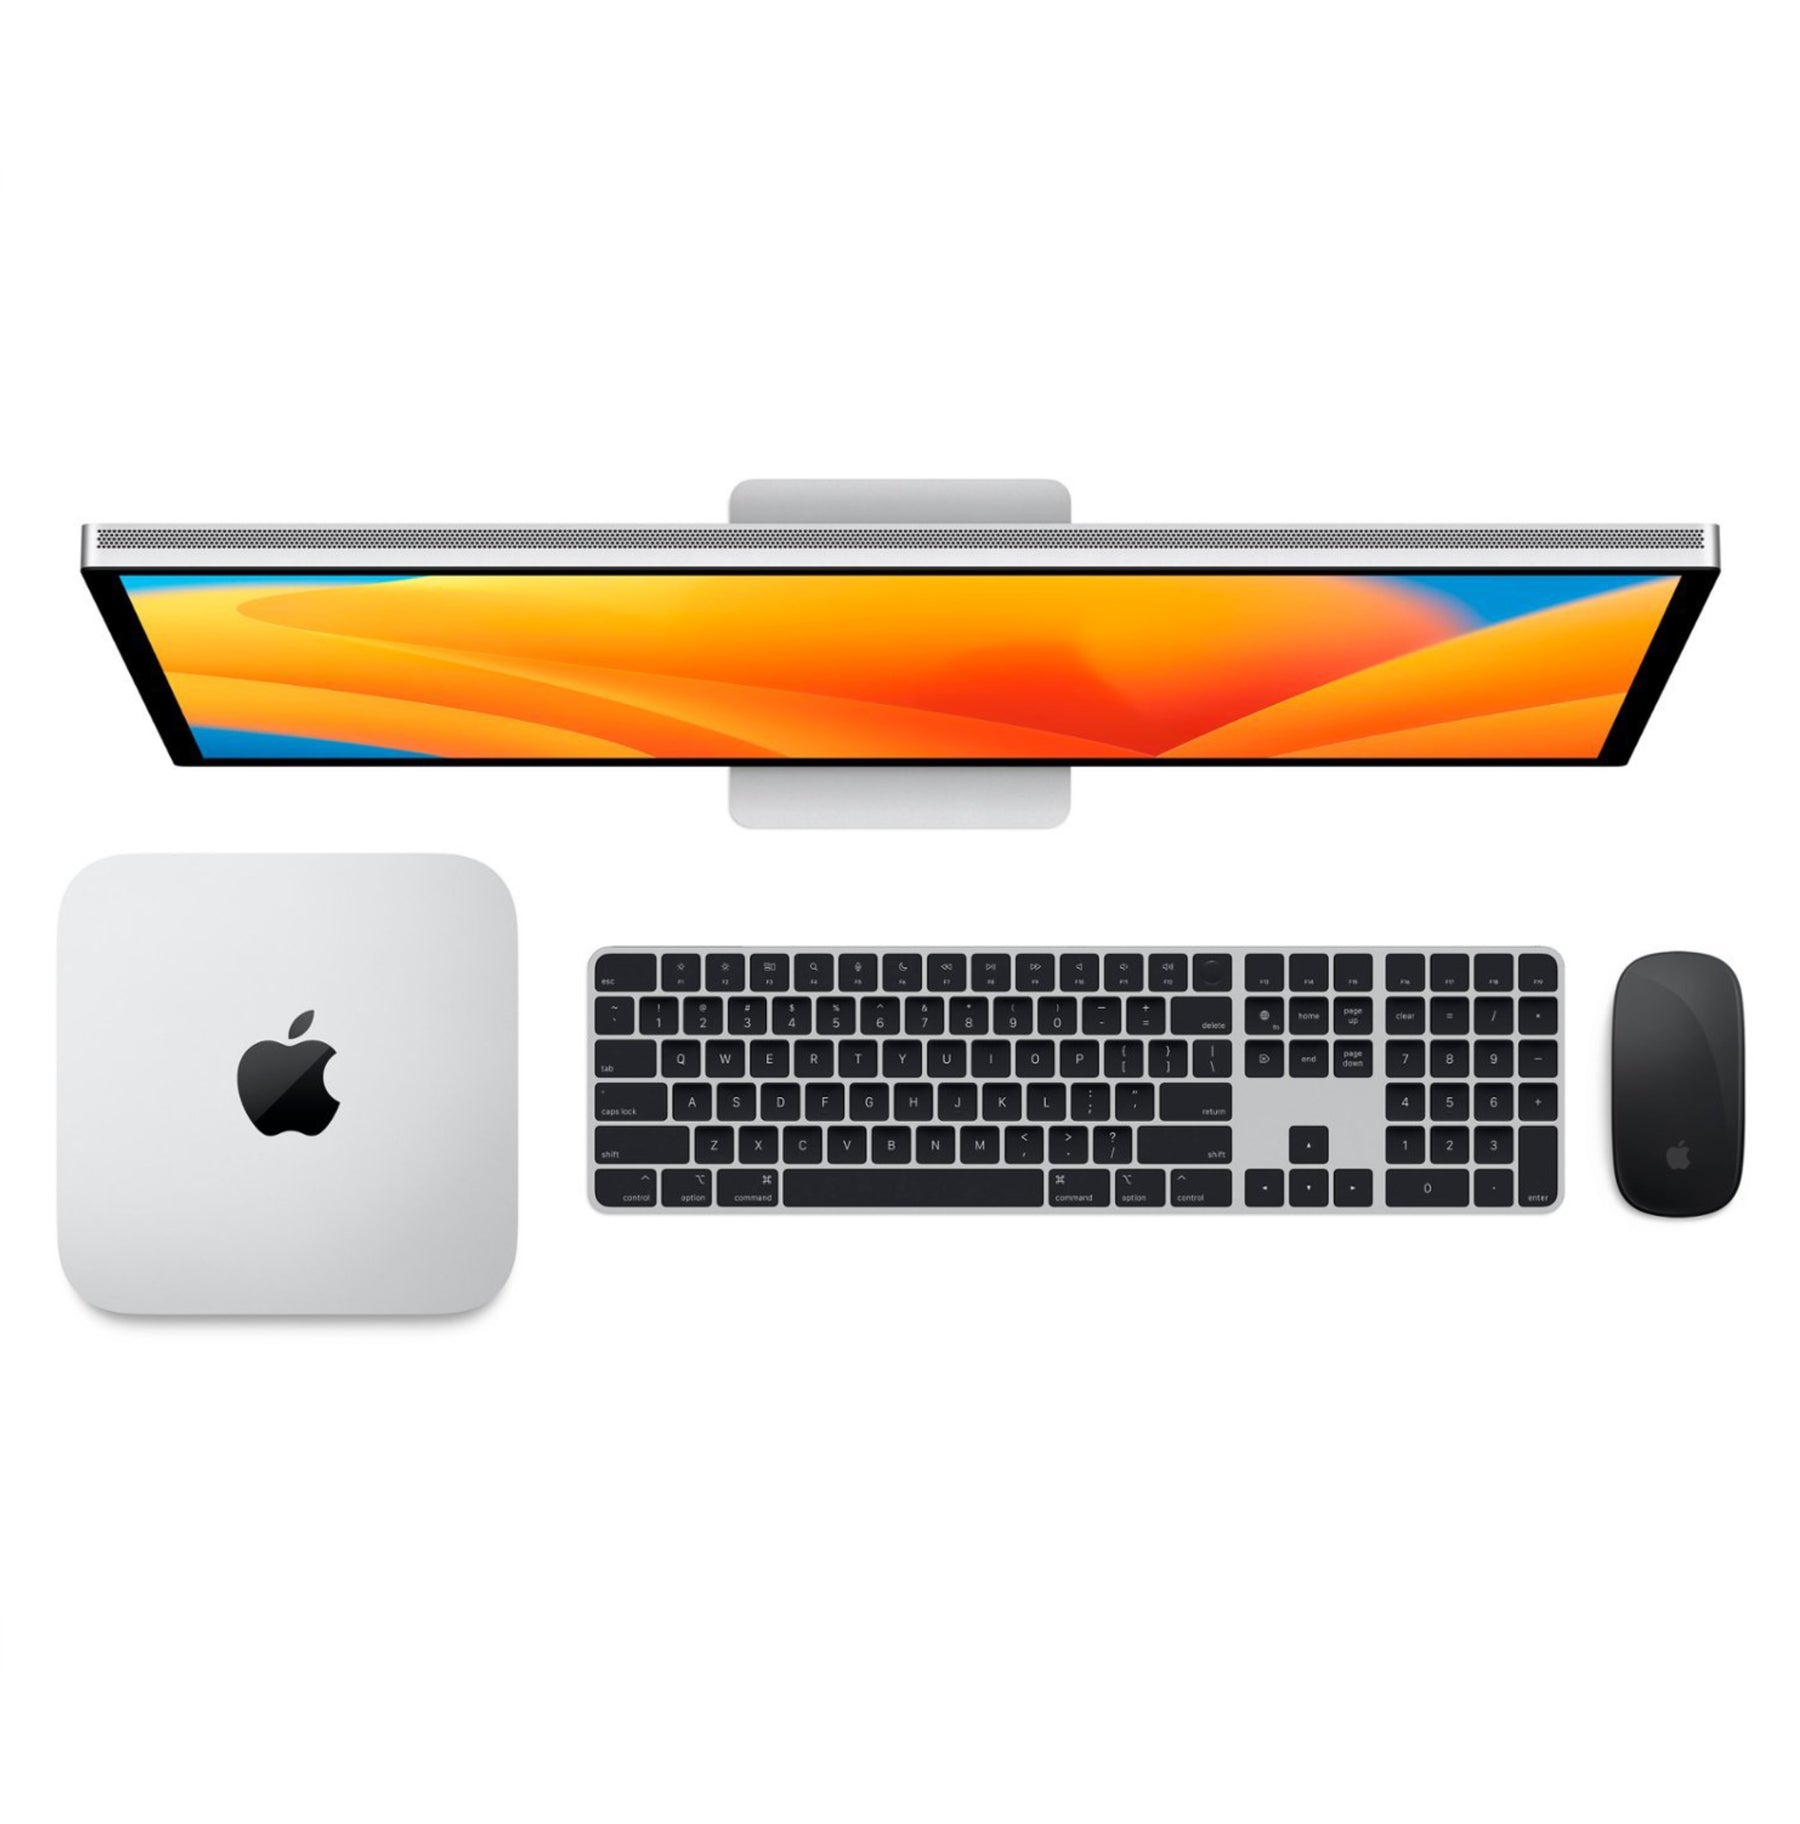 Apple Mac mini Desktop